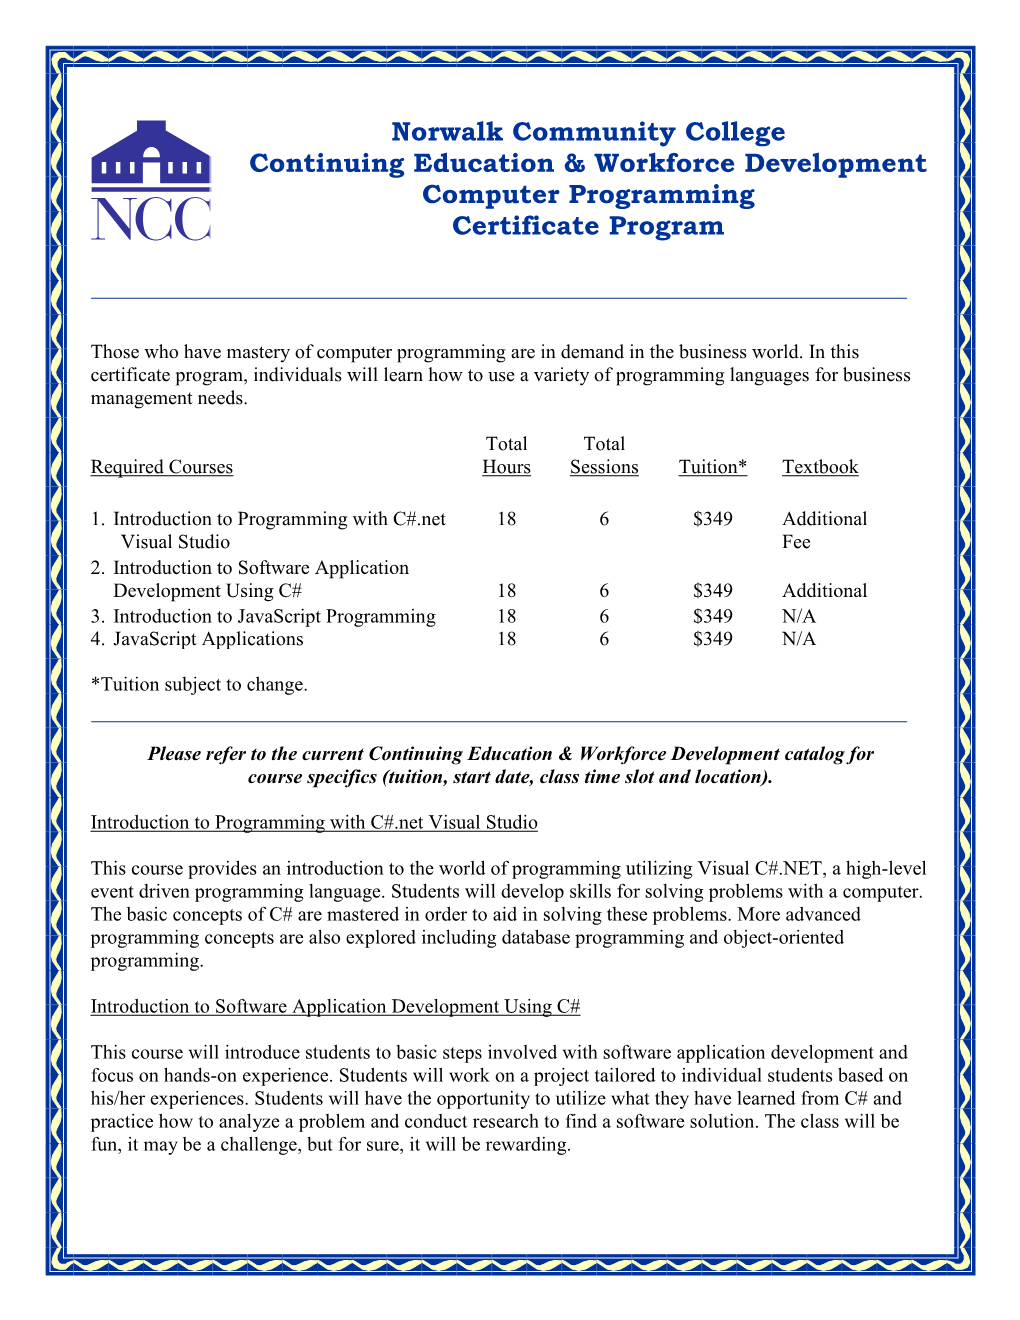 Computer Programming Certificate Program